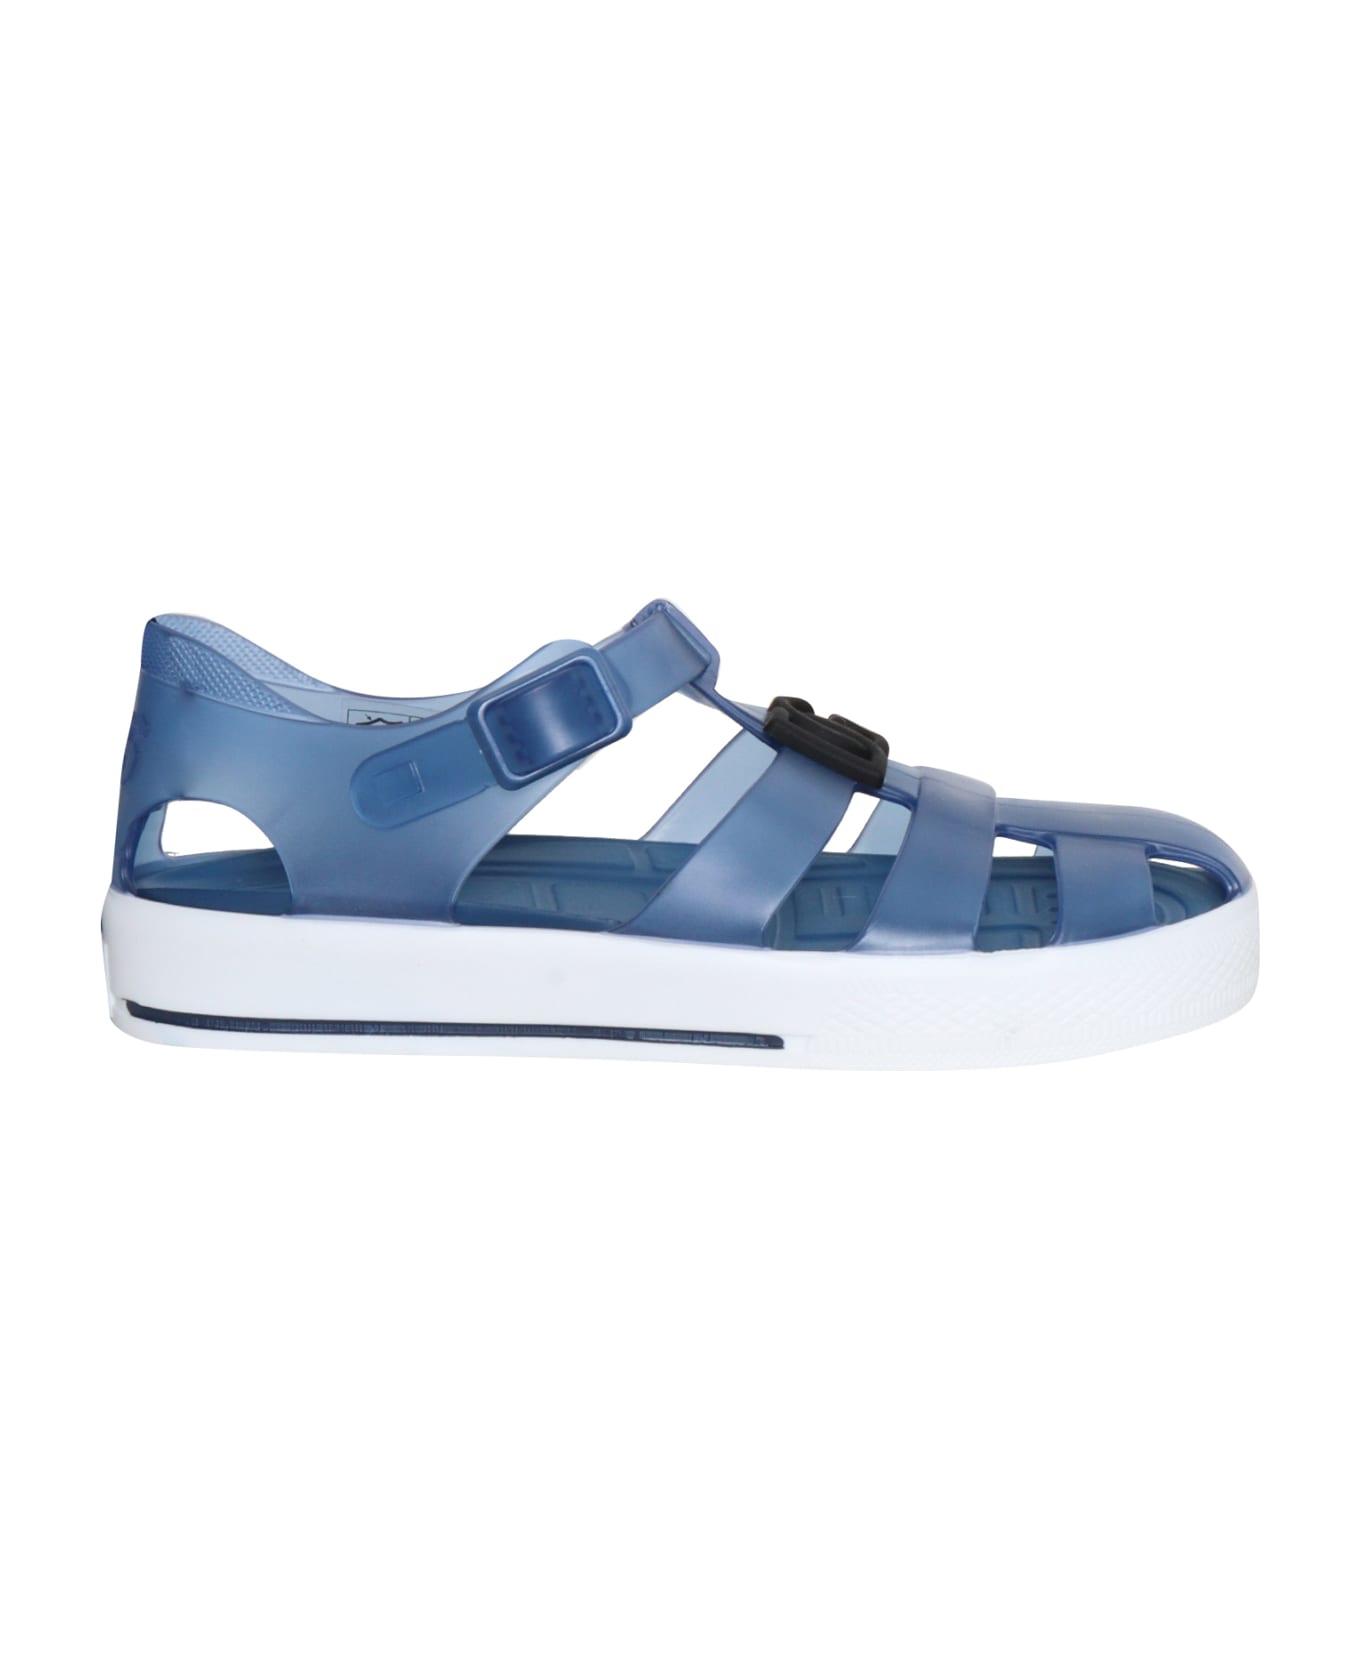 Dolce & Gabbana Light Blue Spider Sandals - BLUE